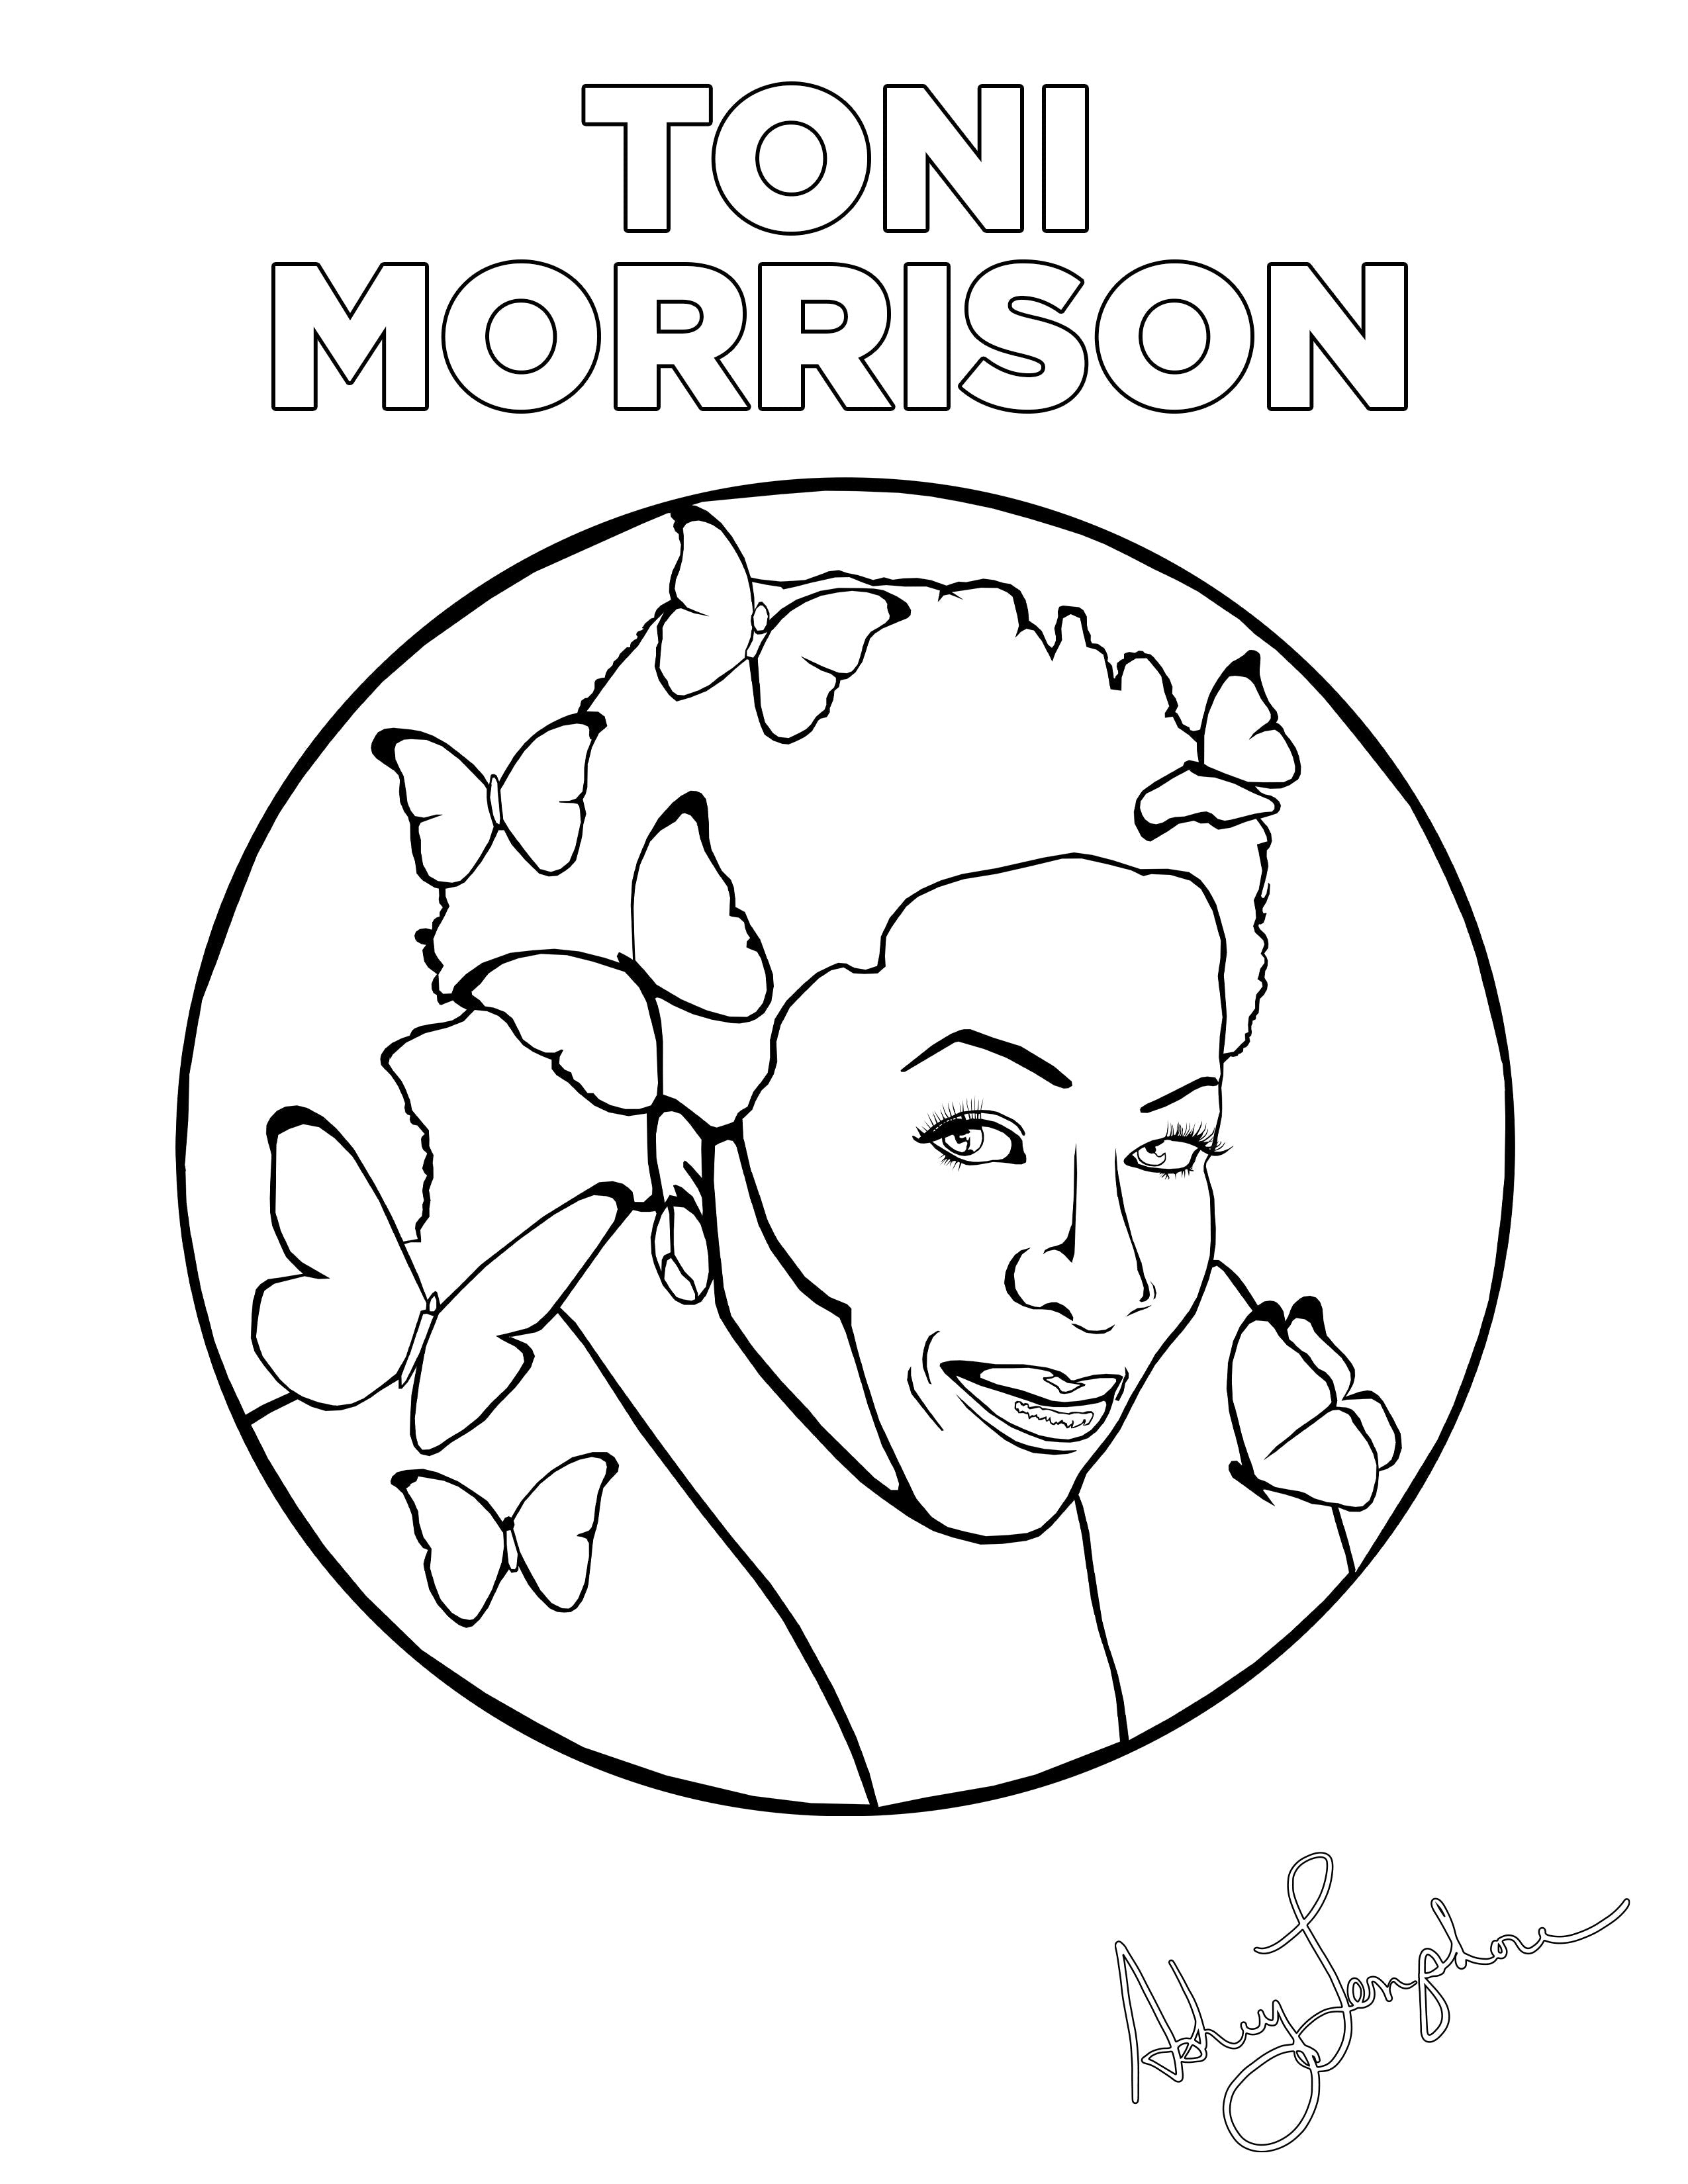 Ashley Longshore coloring pages featuring Toni Morrison.